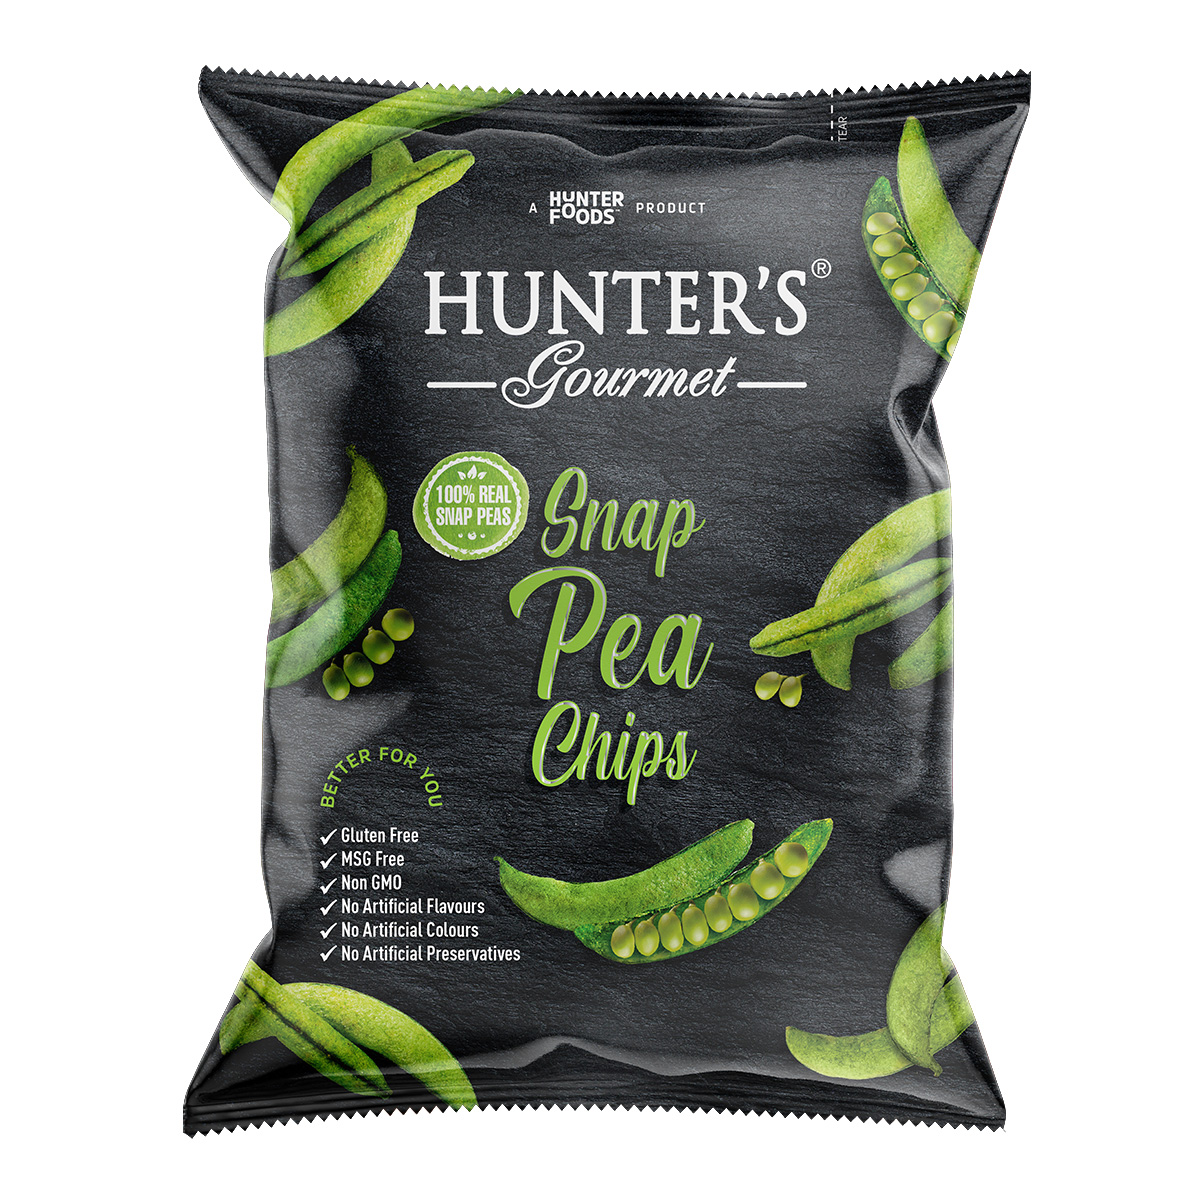 Hunter’s Gourmet Beetroot Chips – Beetroot (60gm)